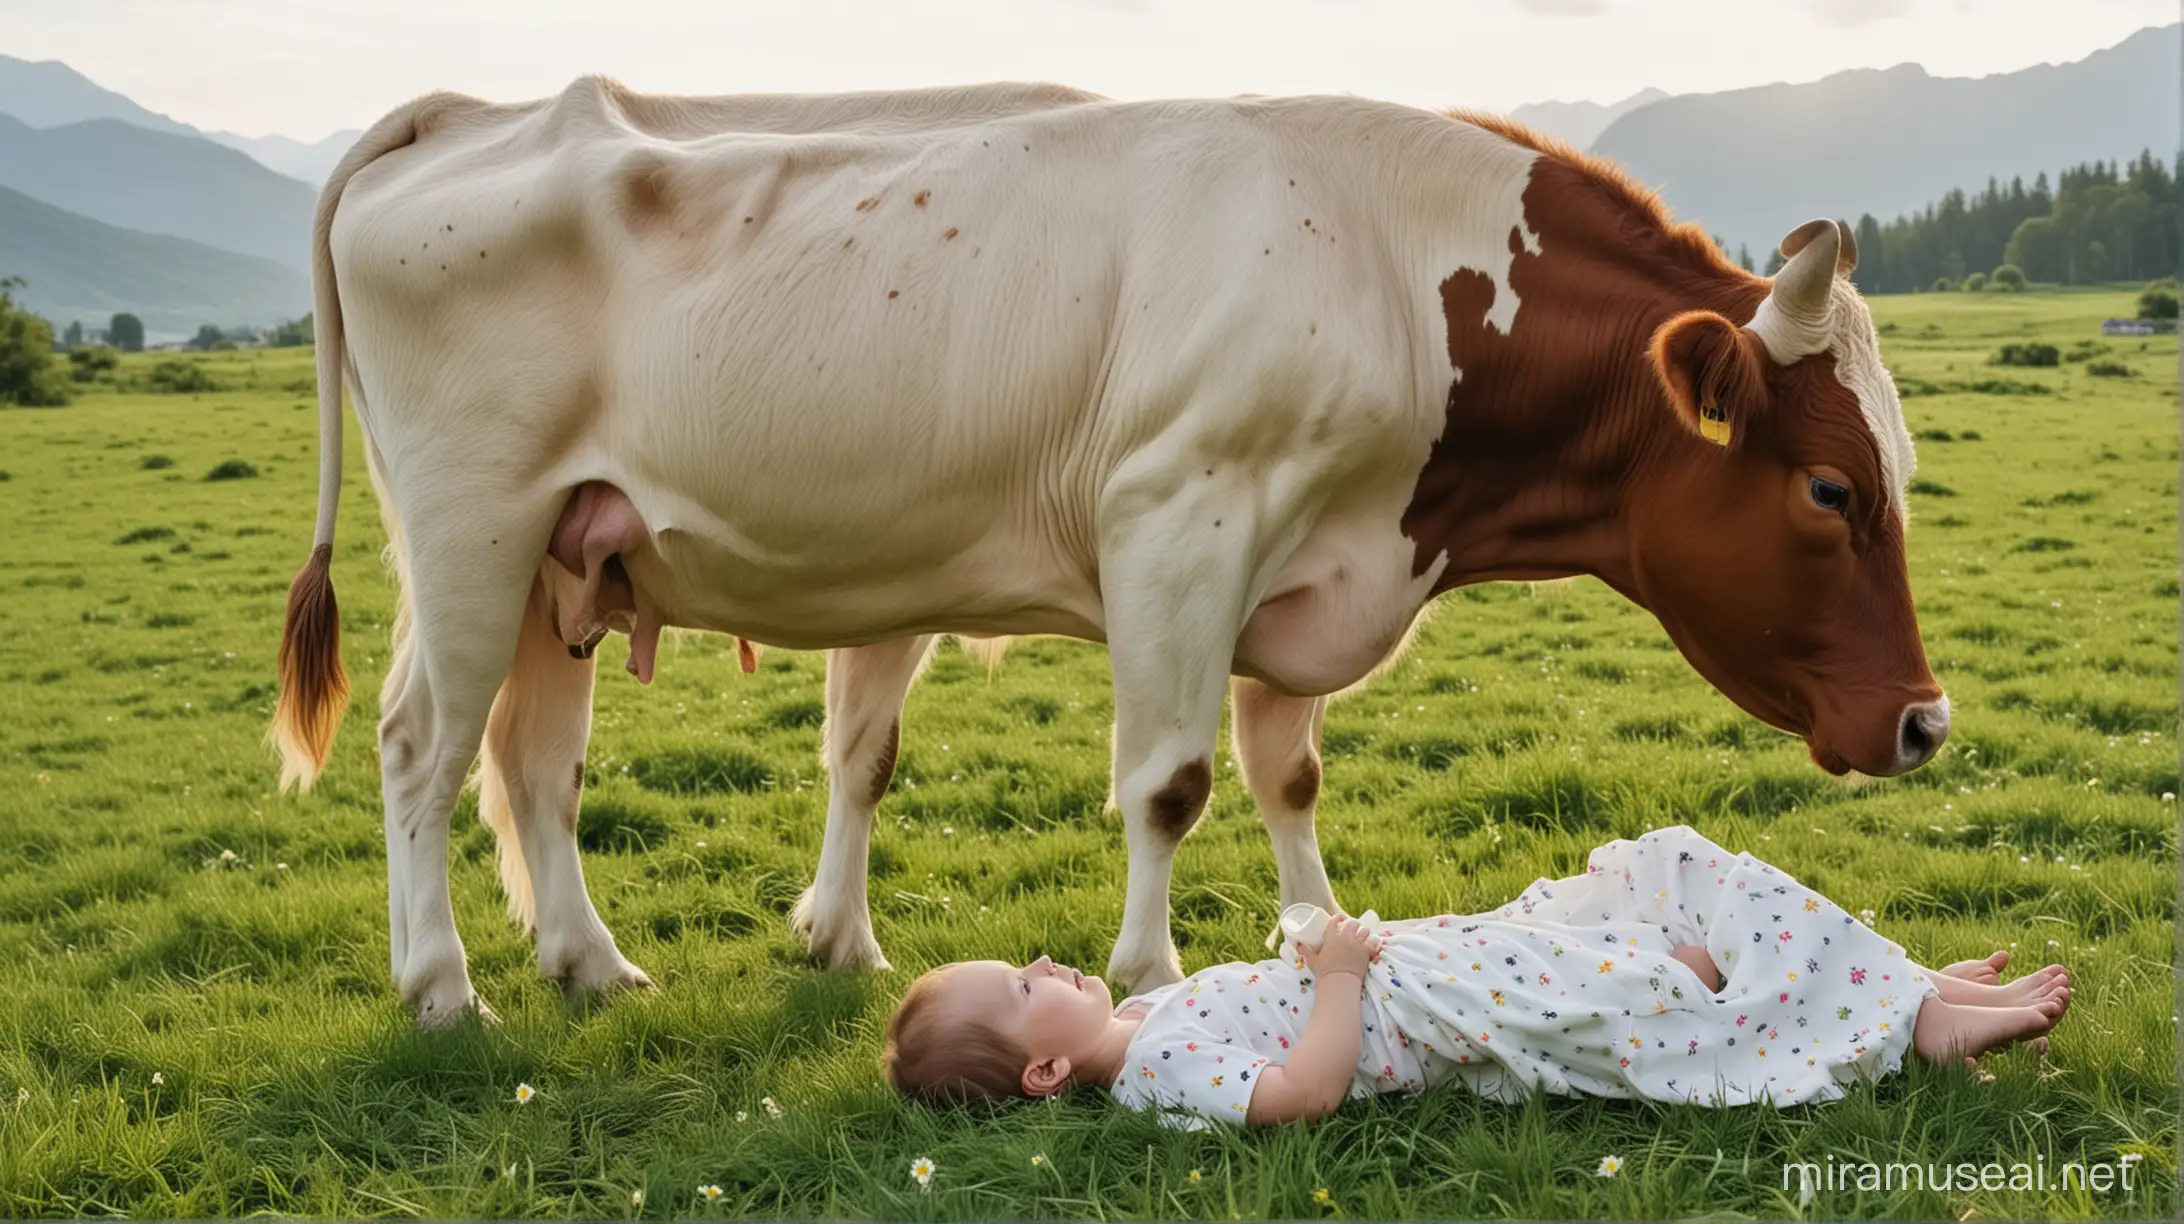 Cow Nursing Human Baby on Lush Grass Field